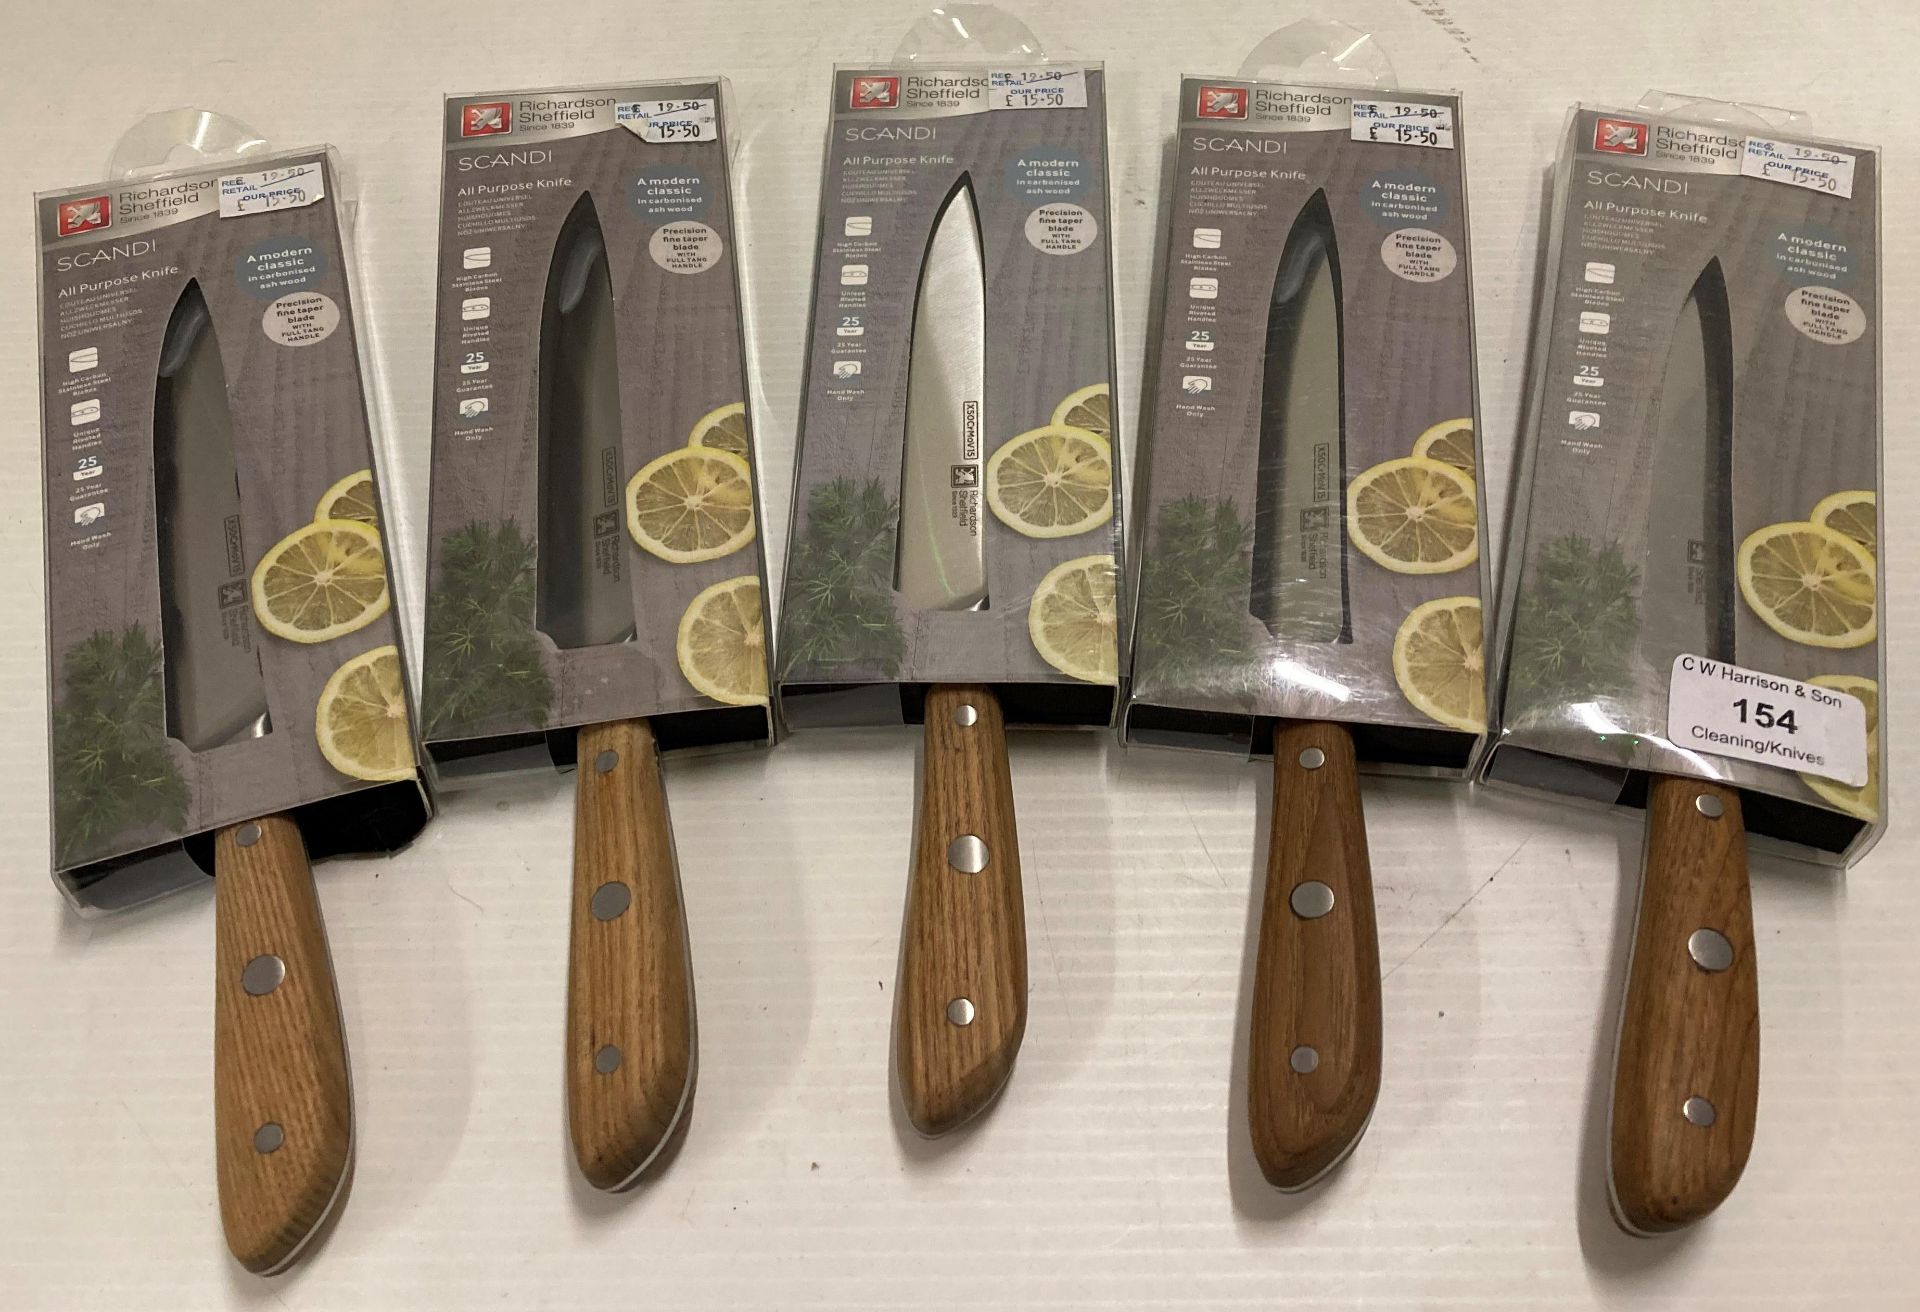 5 x Scandi all purpose knives (V13)